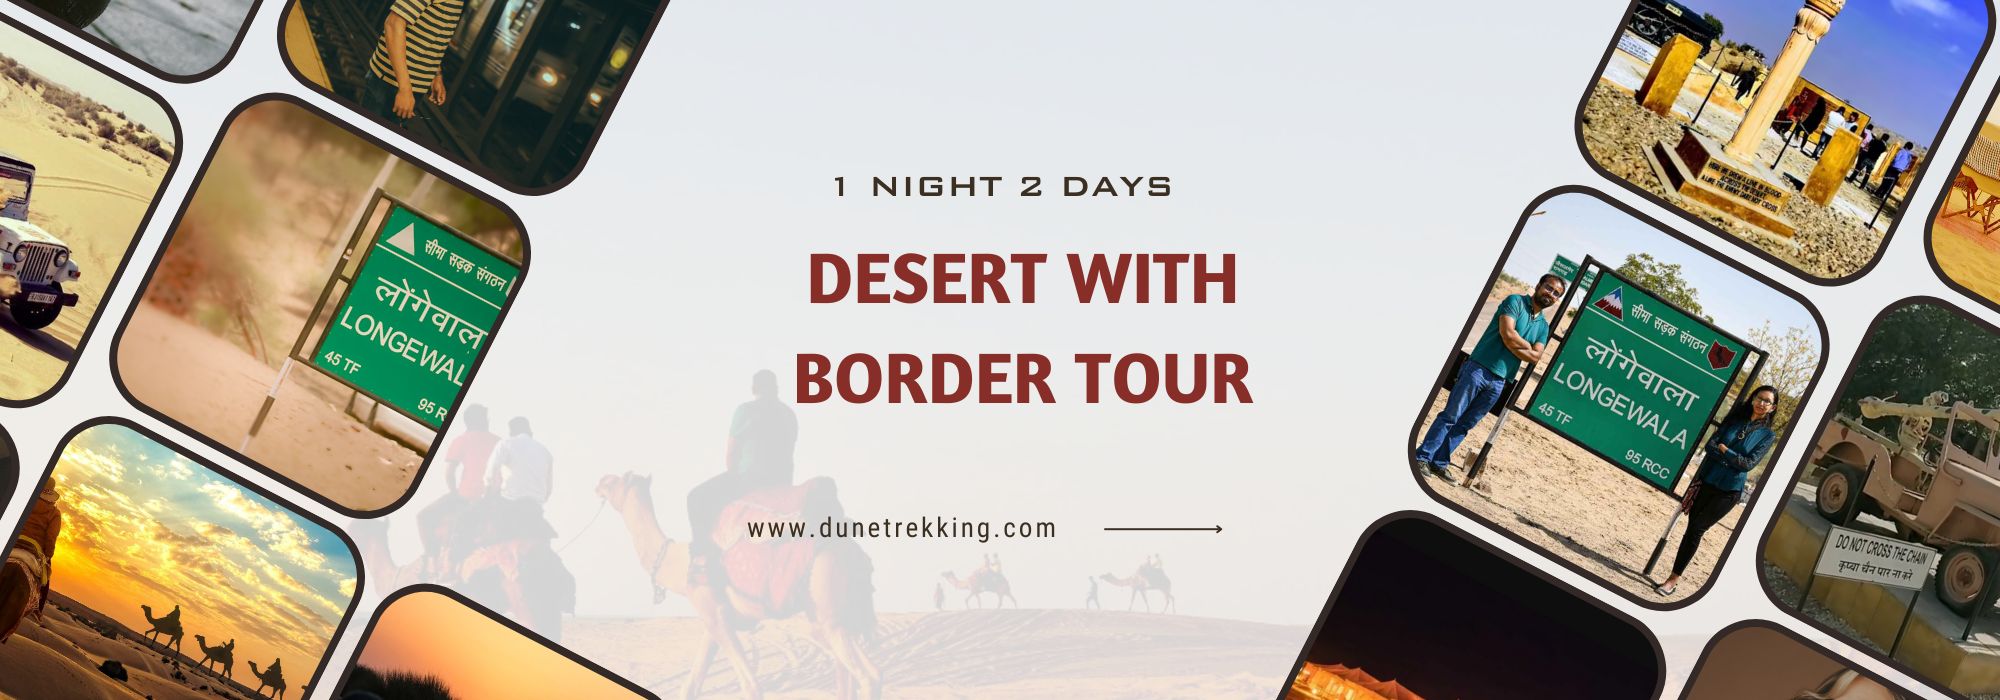 1 Night 2 Days Desert With Border Tour- dunetrekking